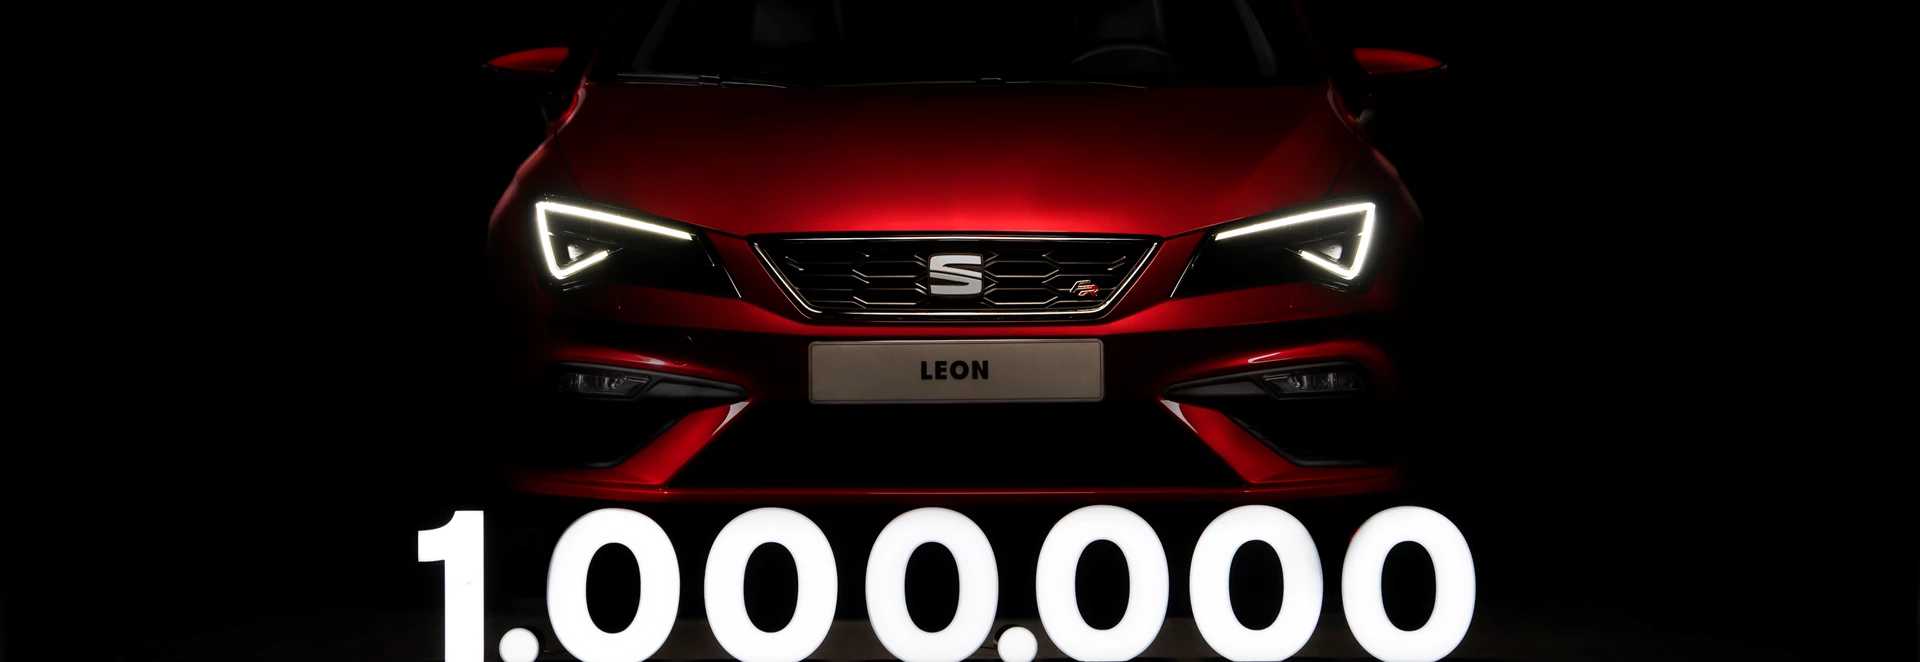 Third-generation Seat Leon reaches 1,000,000 sales